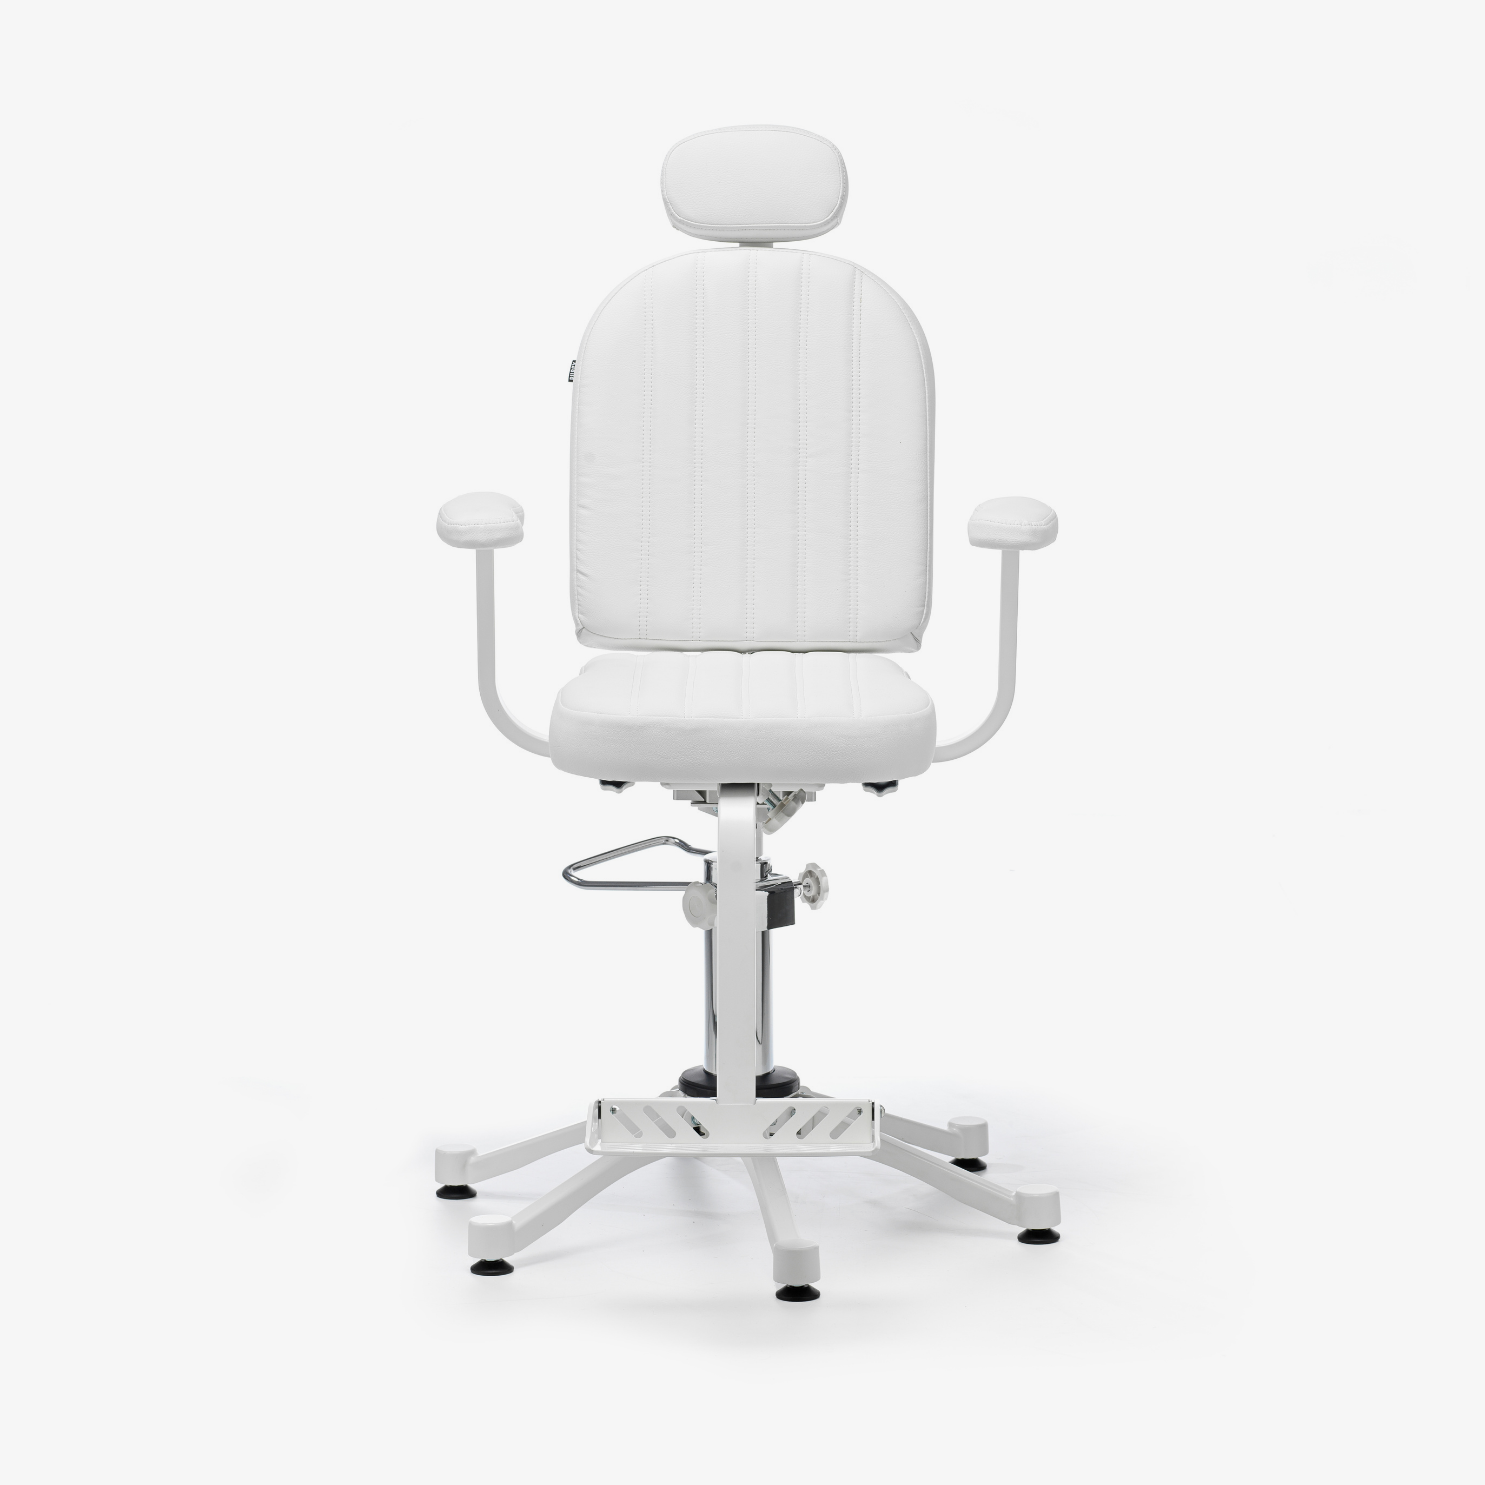 The Purcy Chair - White